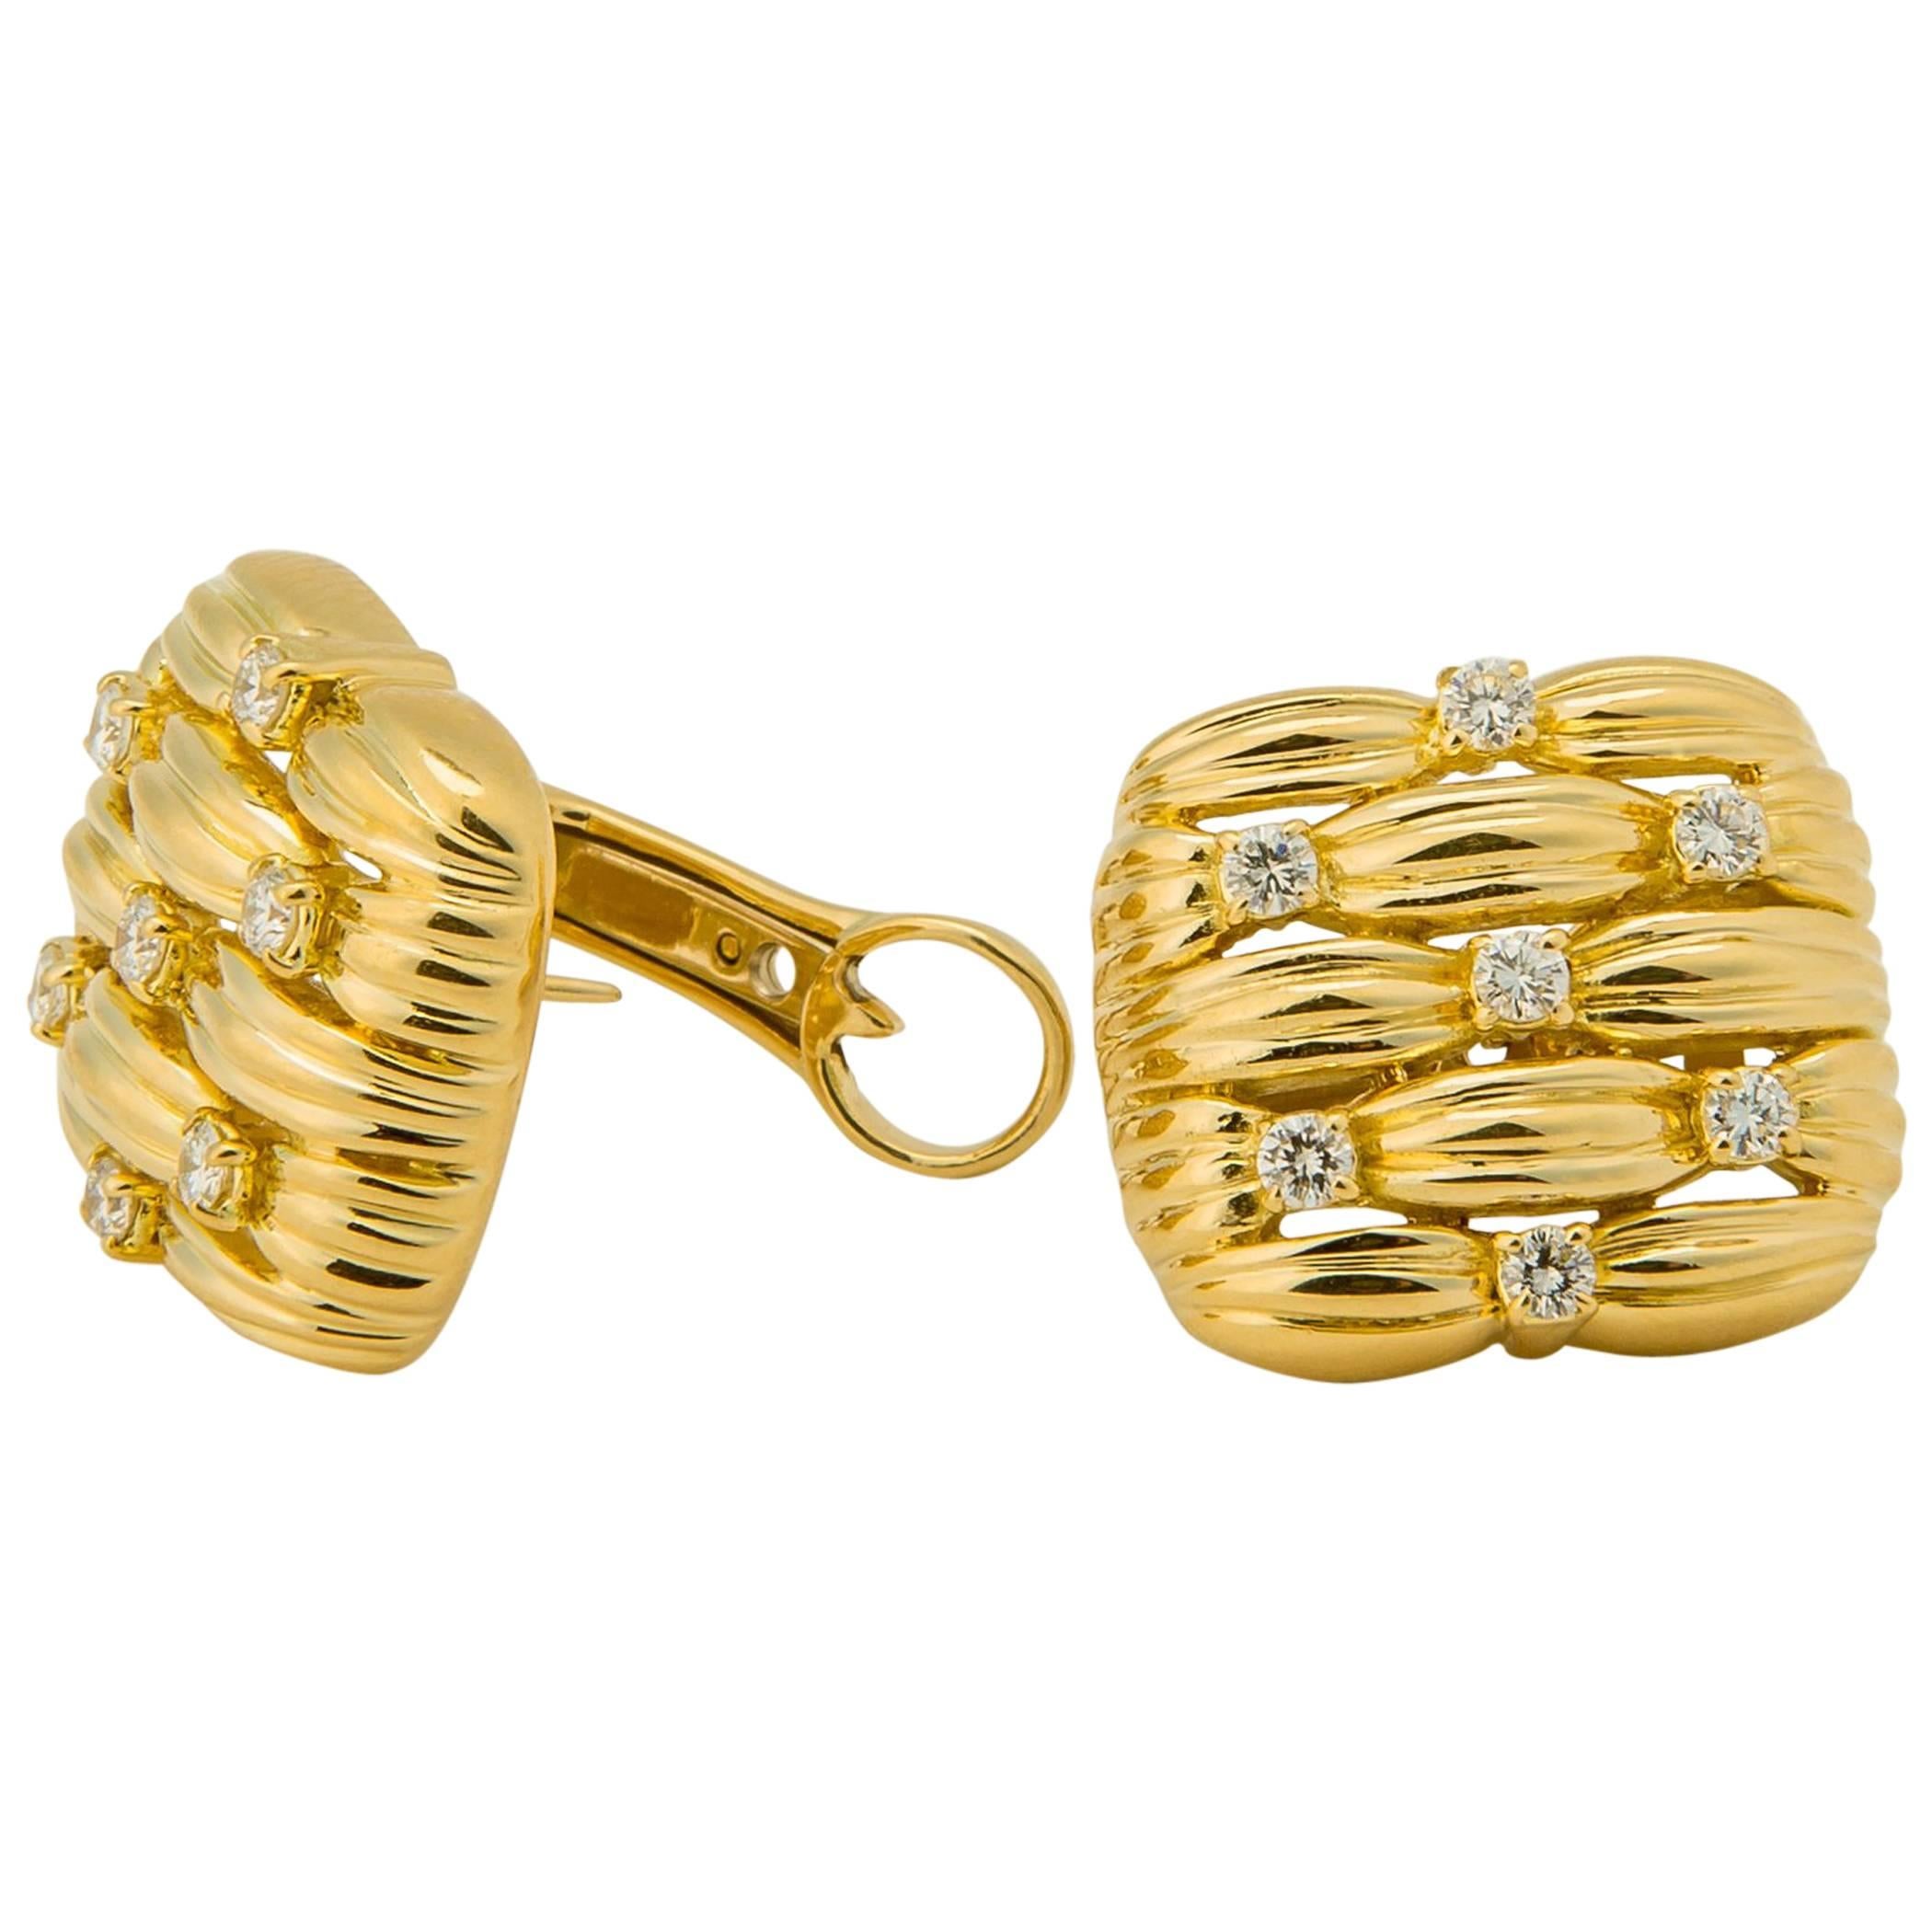 Tiffany & Co. Woven Gold and Diamond Earrings